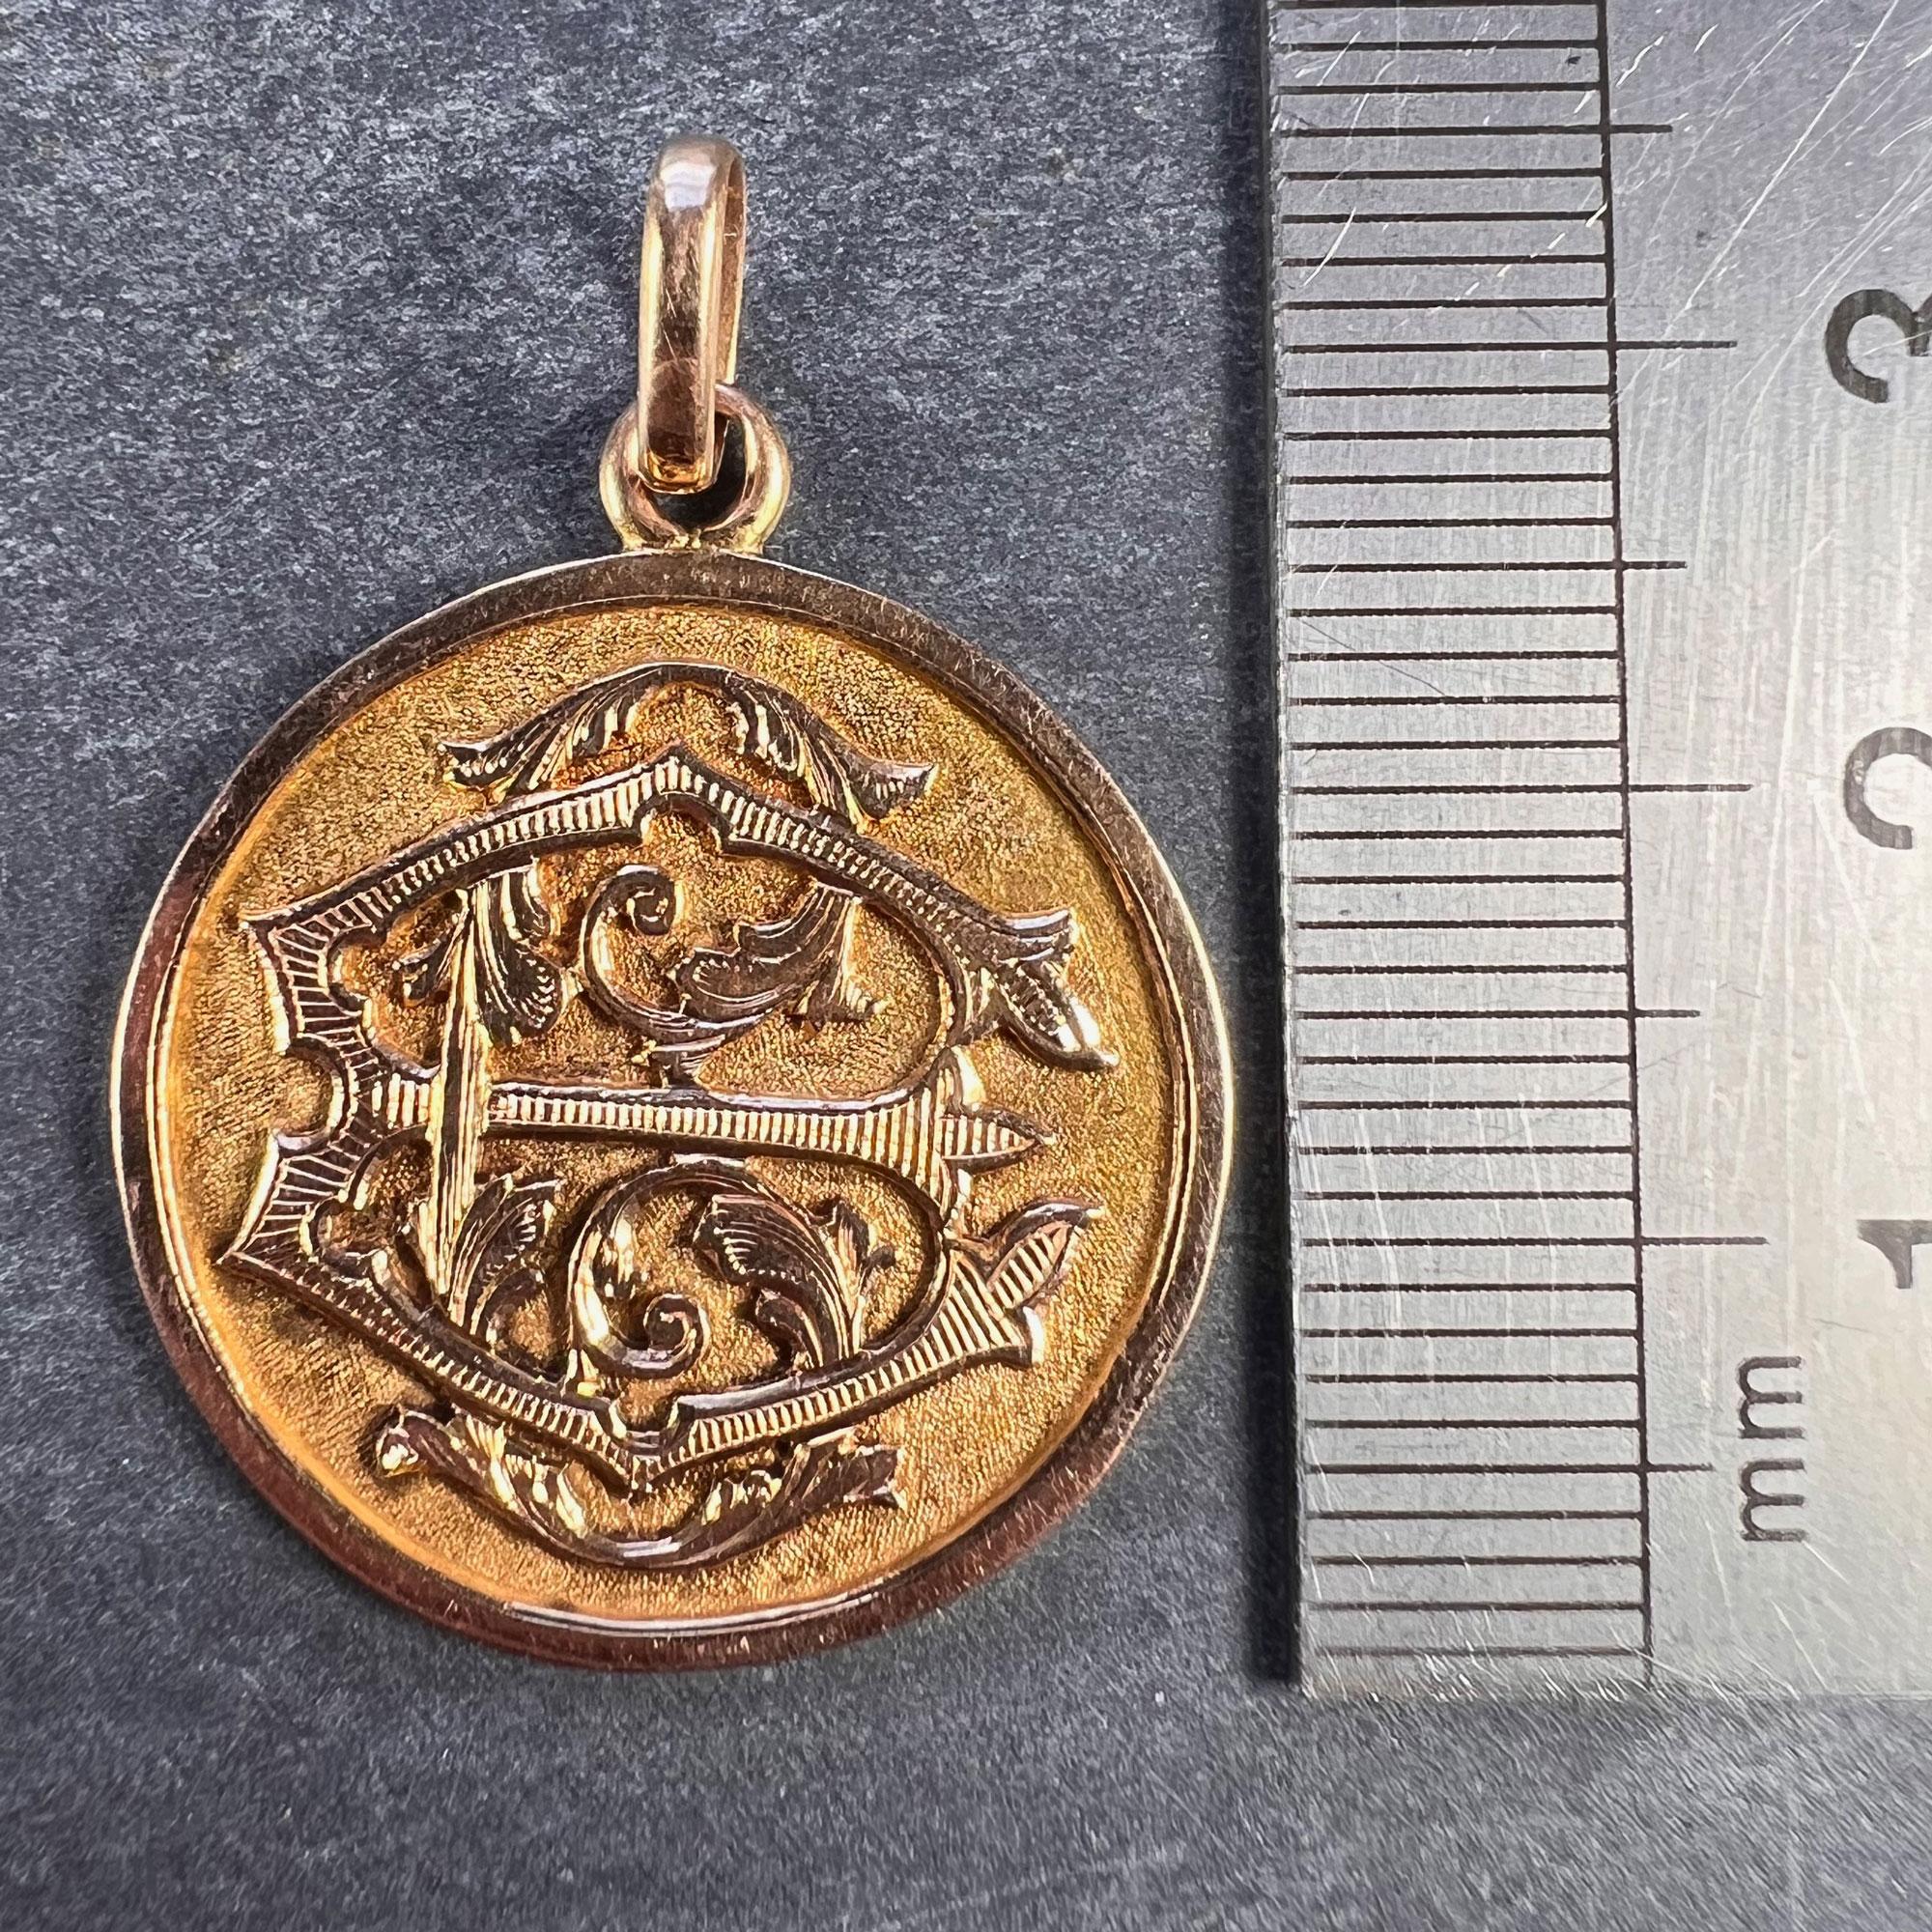 French 18k Rose Gold EC or CE Monogram Medal Pendant For Sale 7